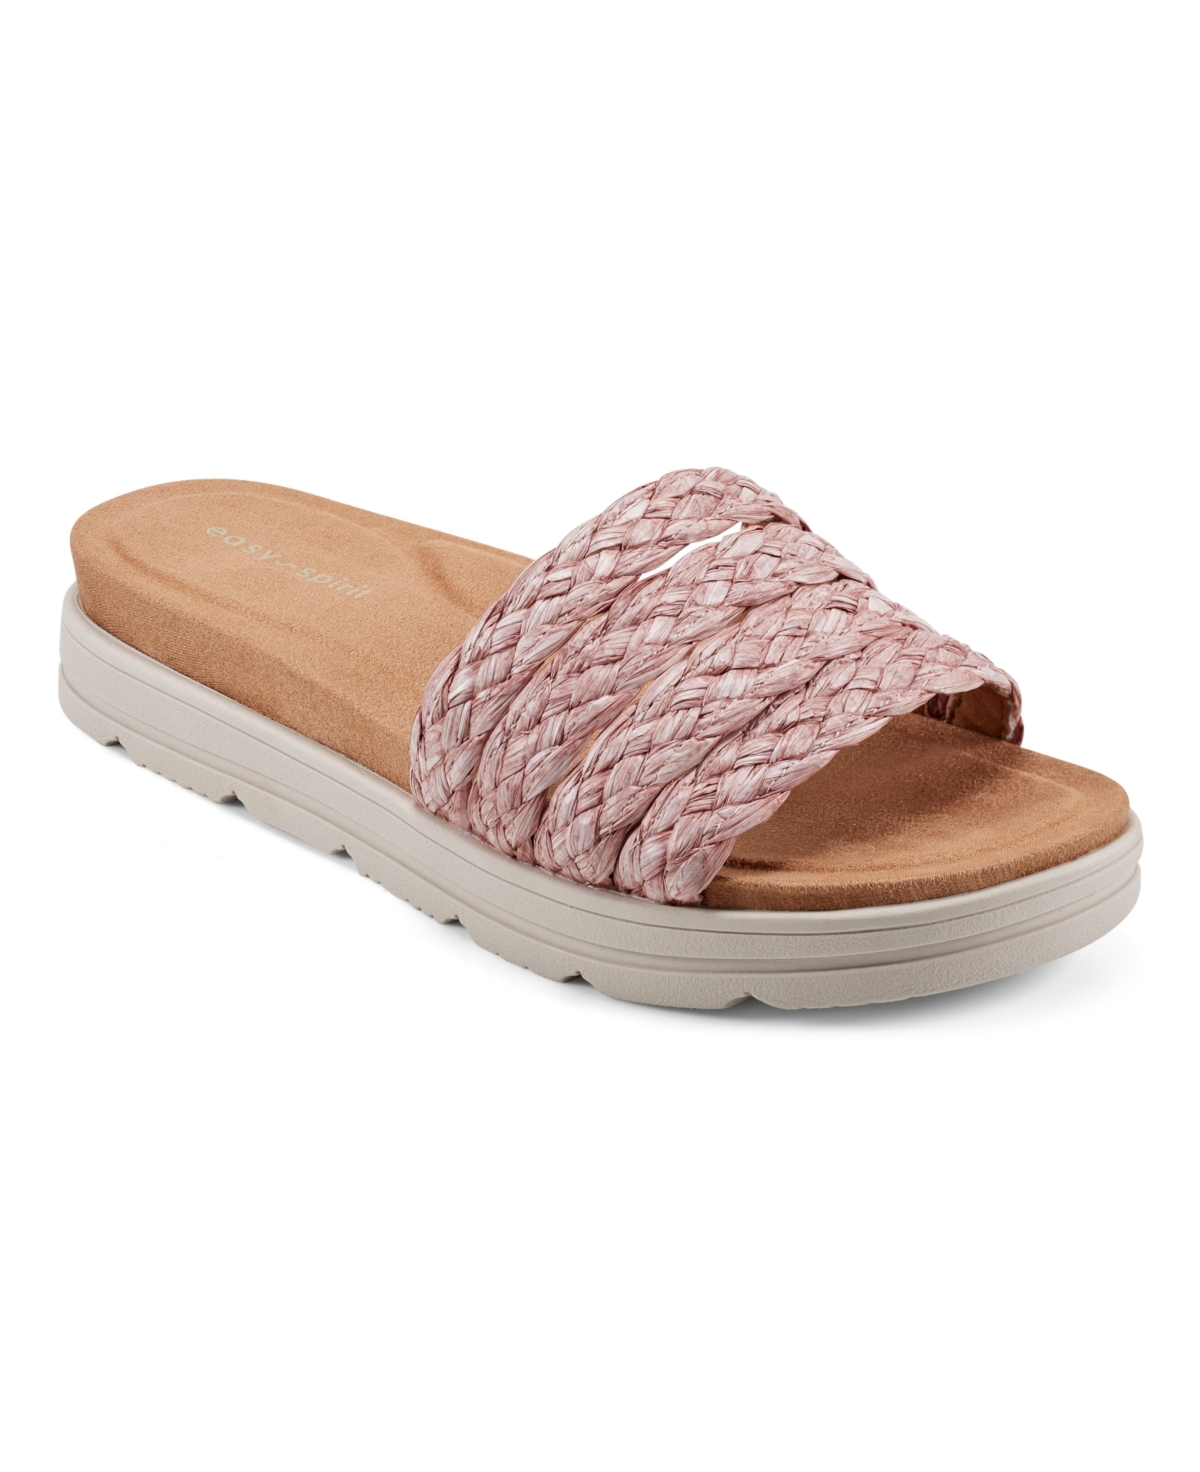 Women's Salma Round Toe Slip-On Strappy Sandals - Light Pink